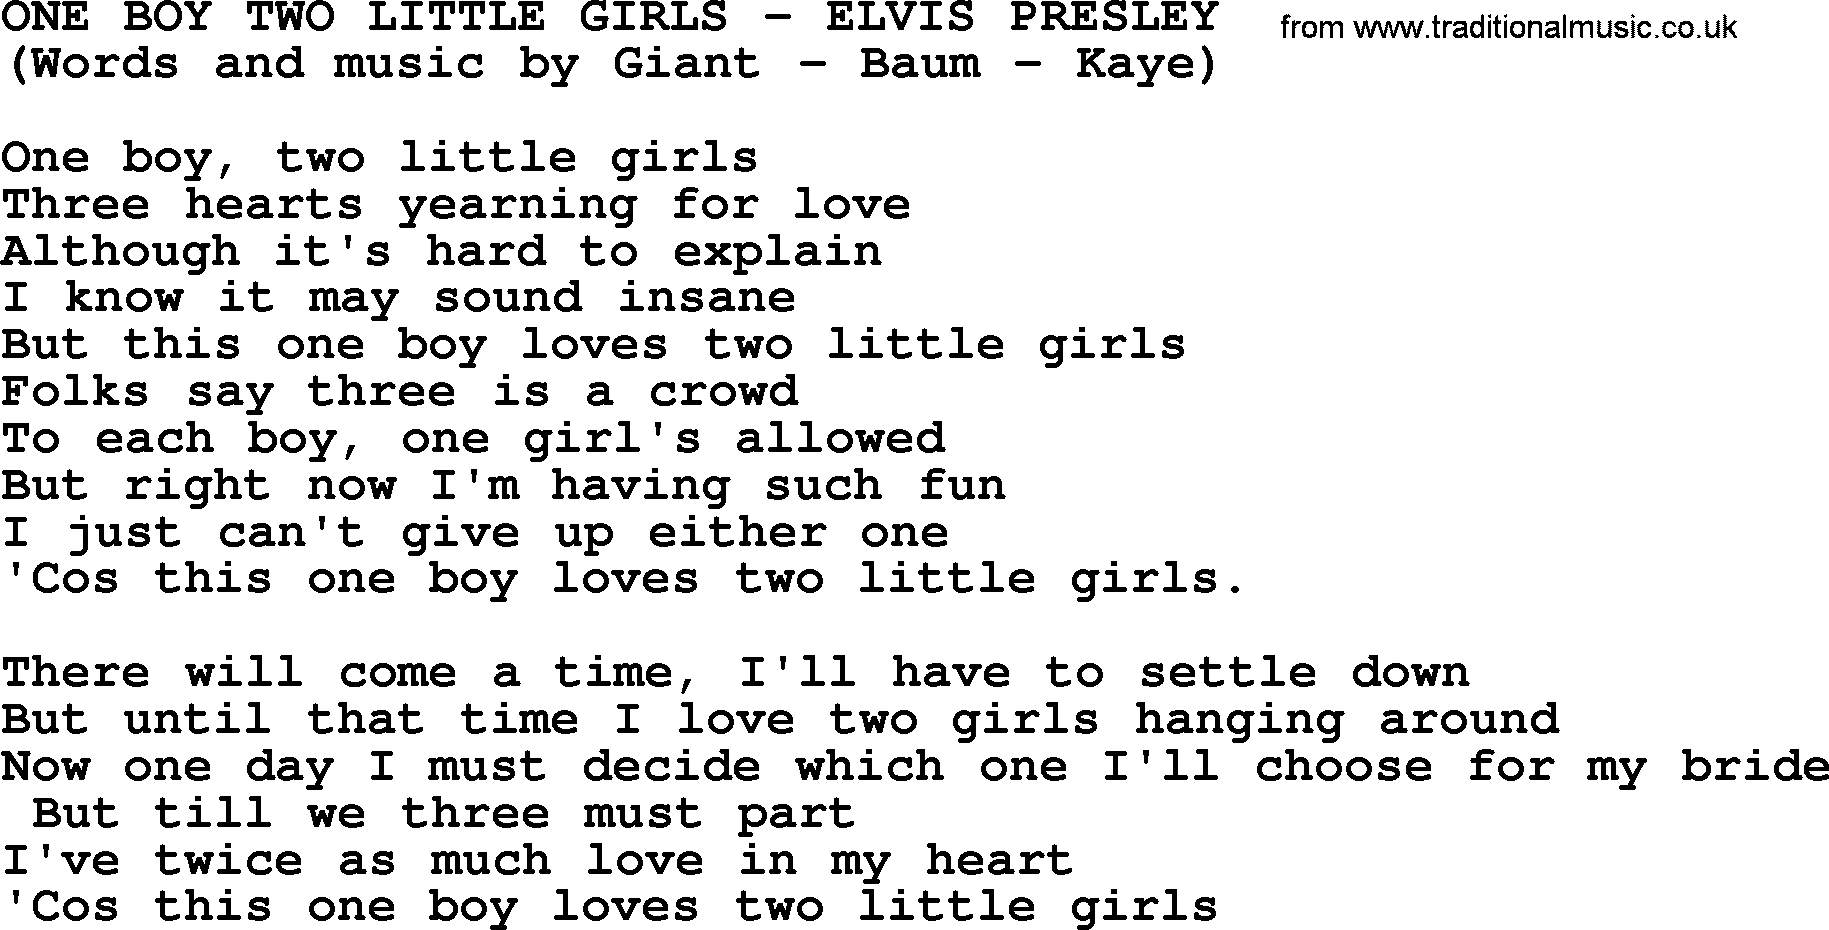 Elvis Presley song: One Boy Two Little Girls lyrics